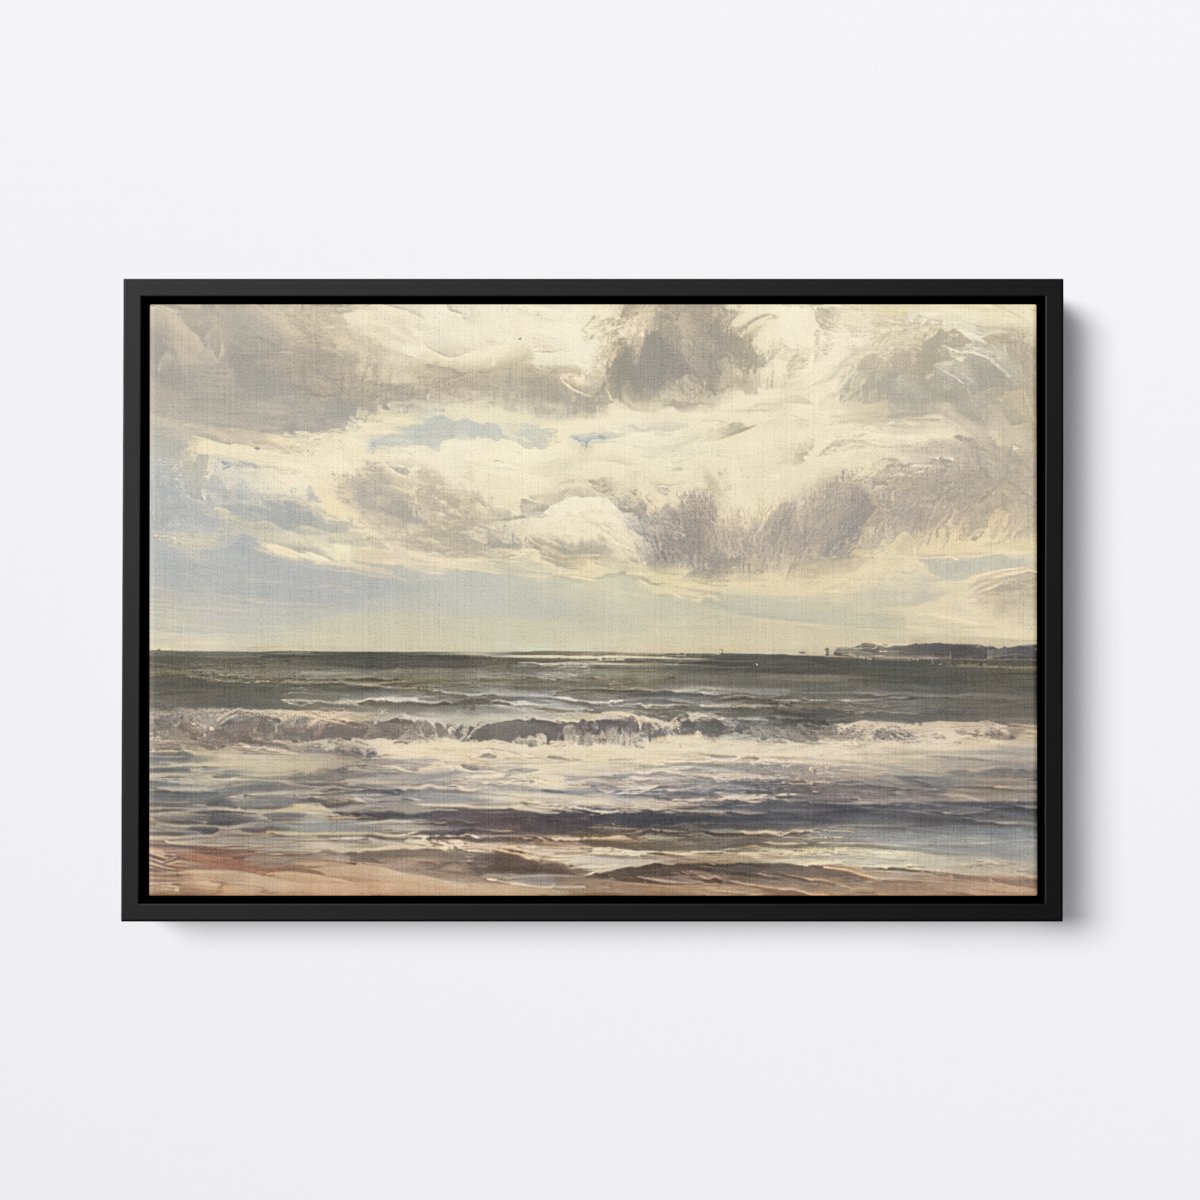 Tides Over Sands | Sidney Percy | Ave Legato | Canvas Art Prints | Vintage Artwork